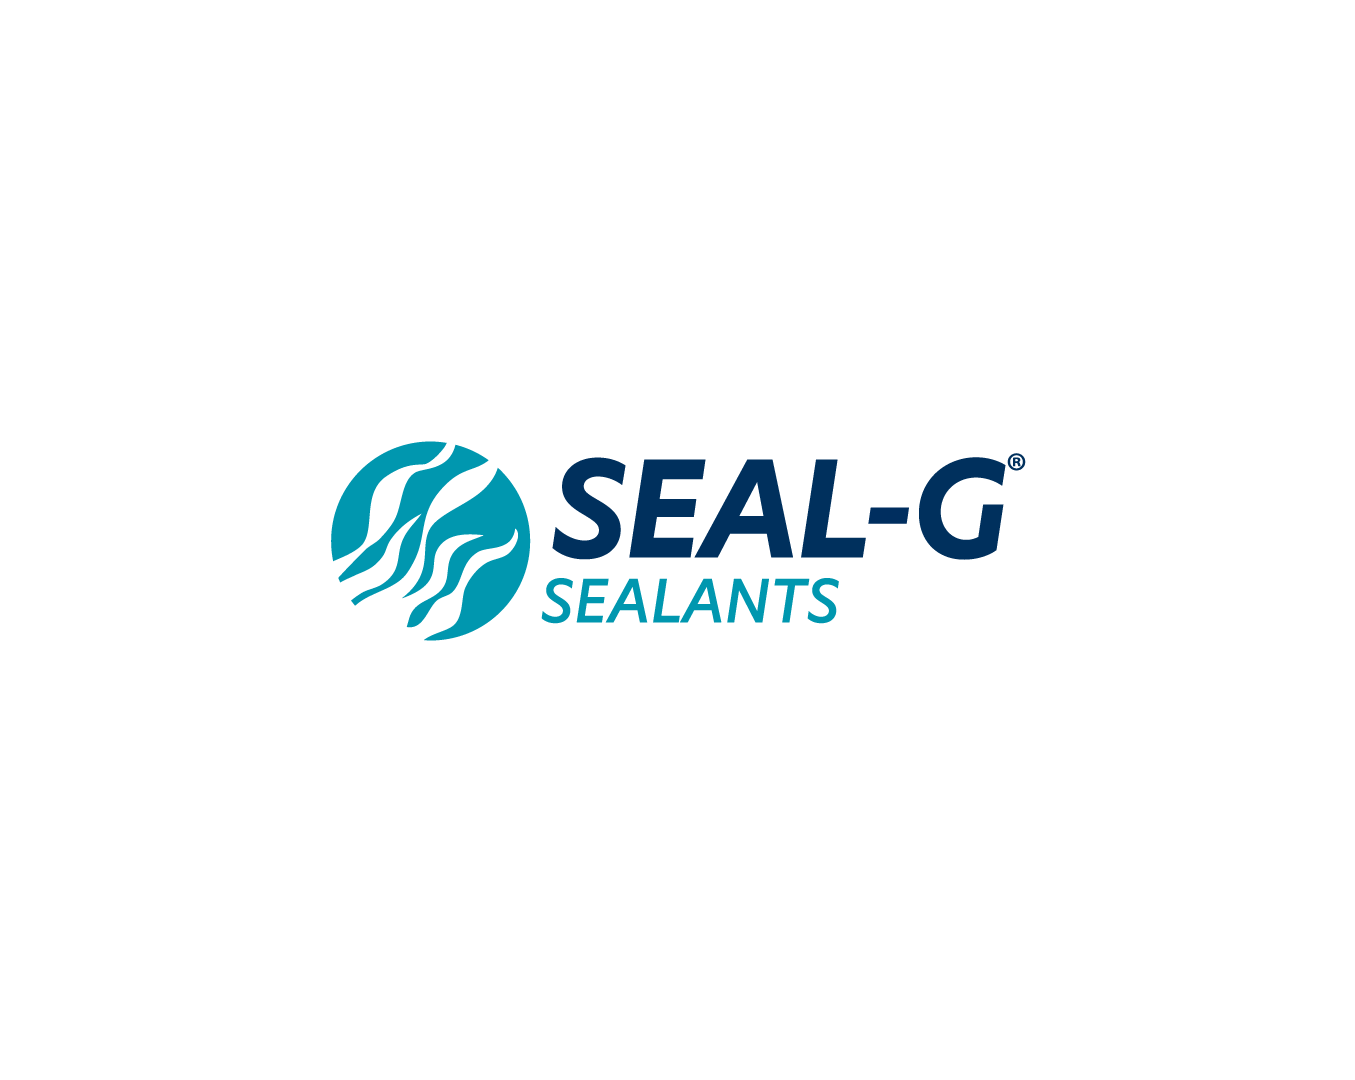 Evolving and realigning seal g logo